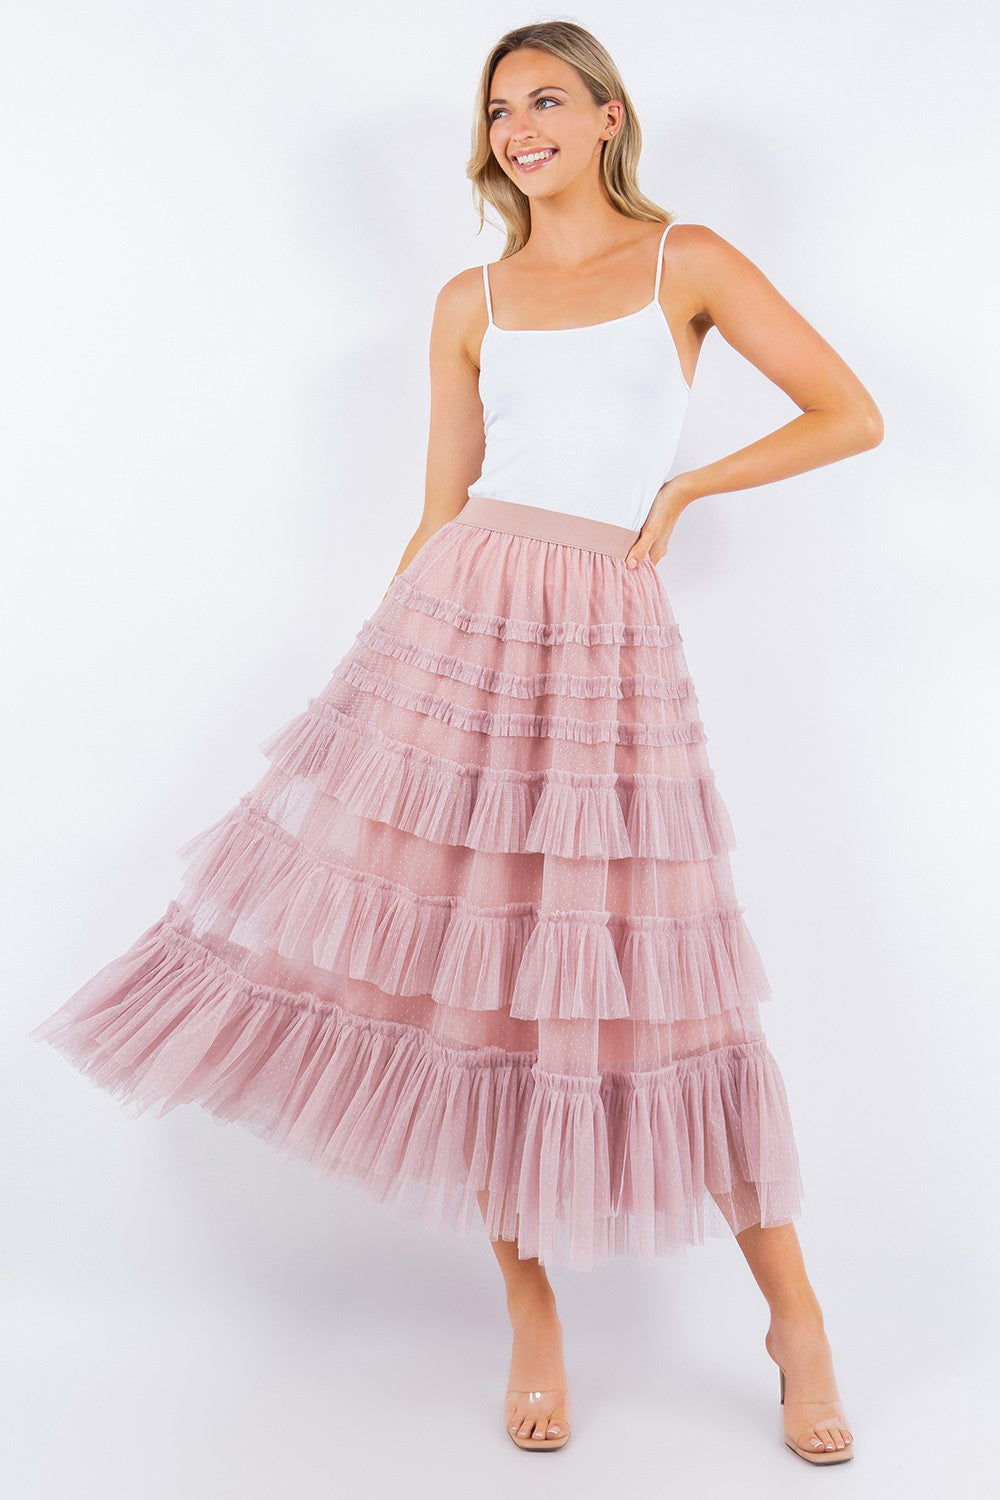 Isla Whimsical Blush Ruffled Tiered Mini Dot Tulle Midi Skirt